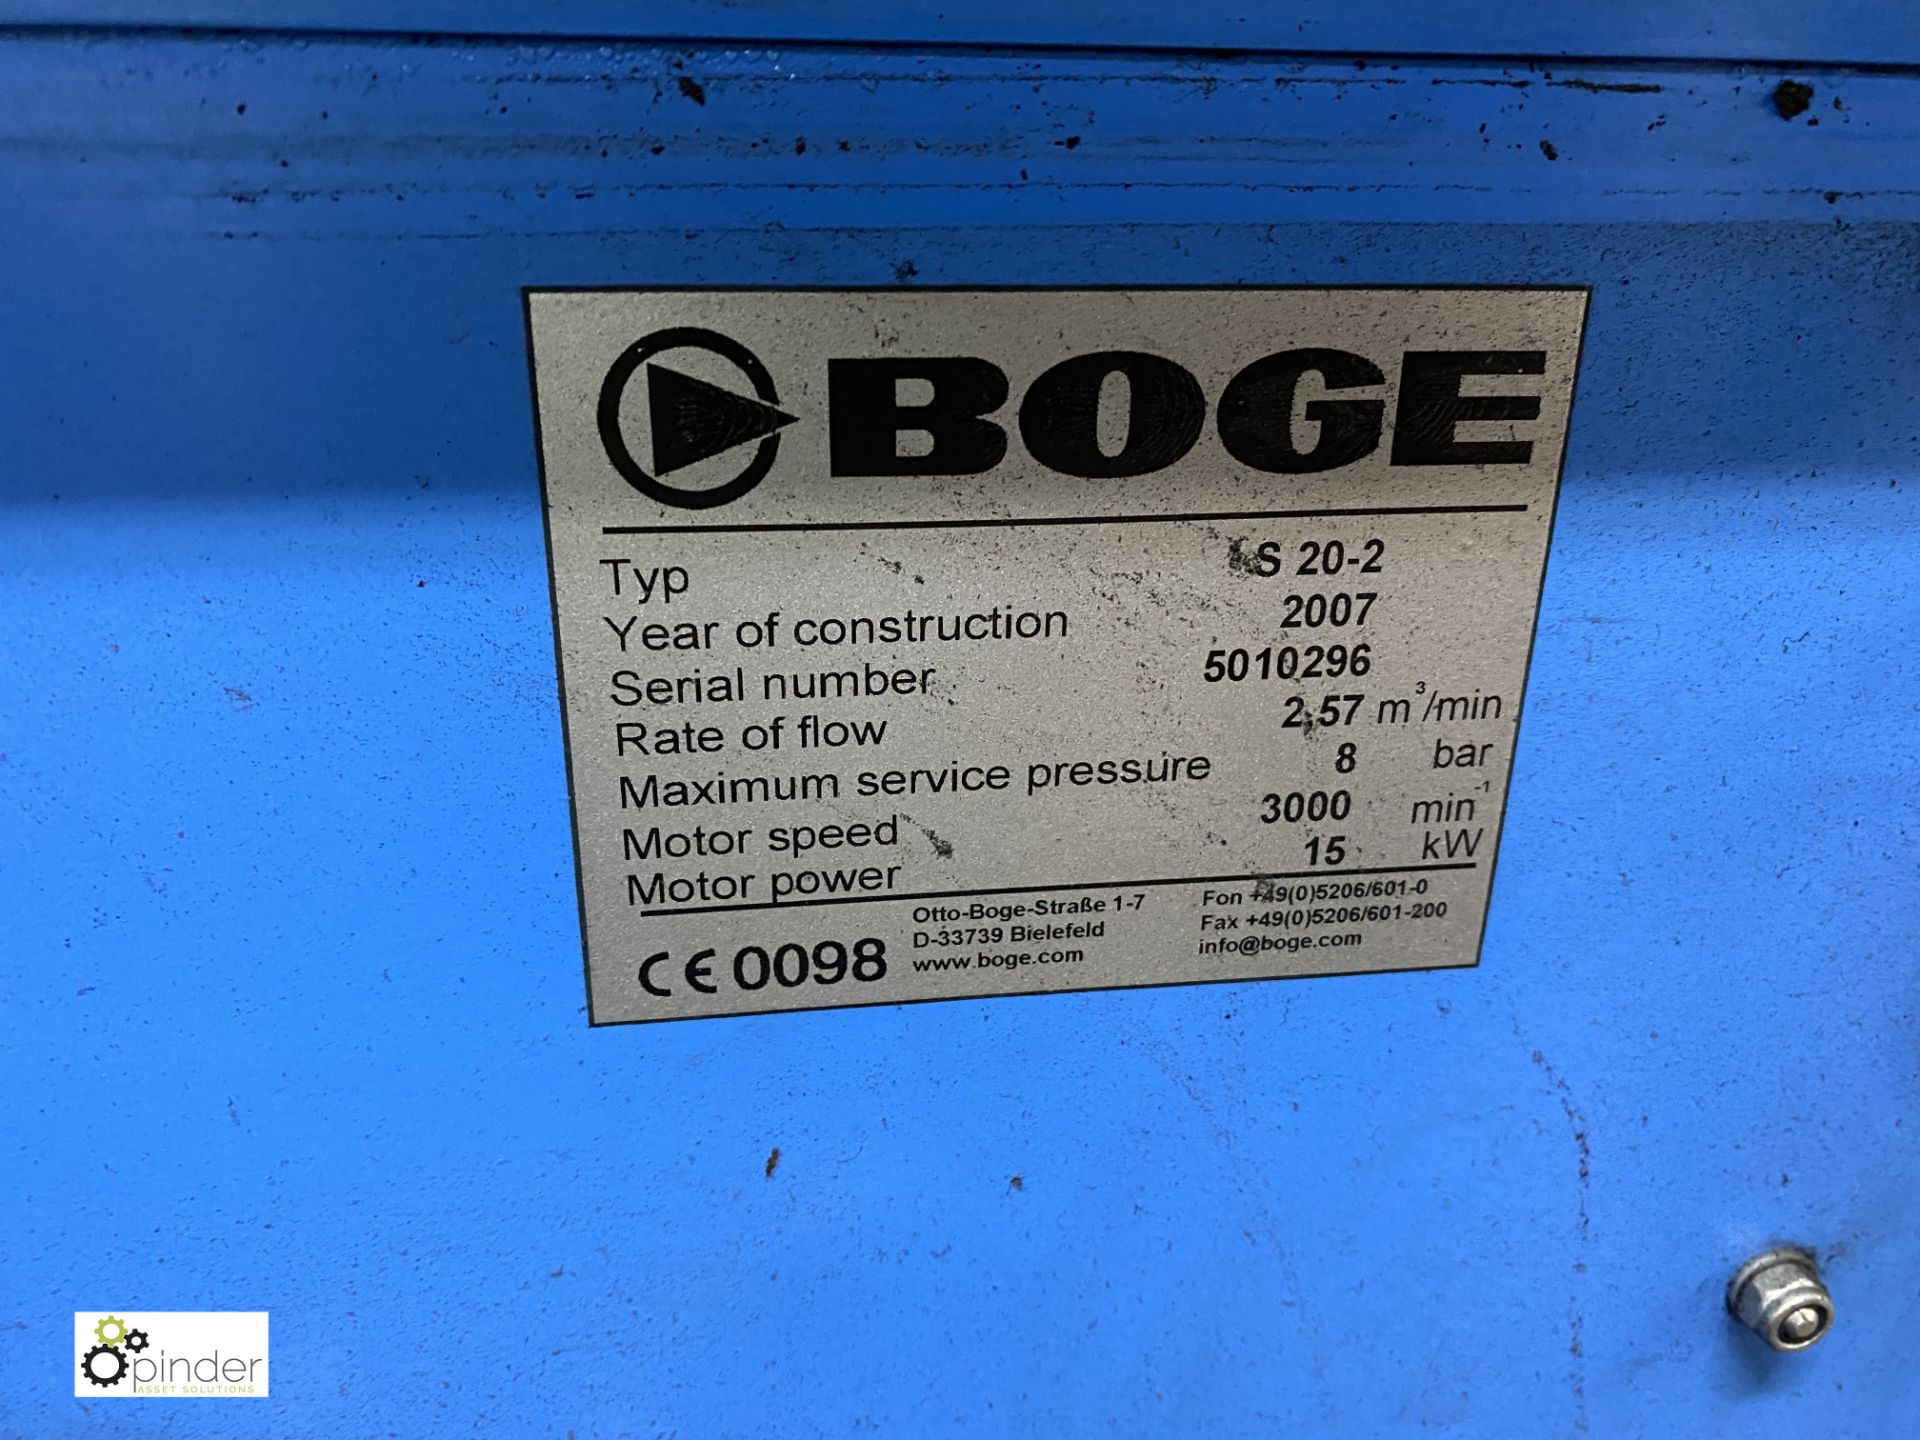 Boge S20-2 Packaged Air Compressor, swp 8bar, 15kw motor, year 2007, serial number 5010296, - Image 5 of 6